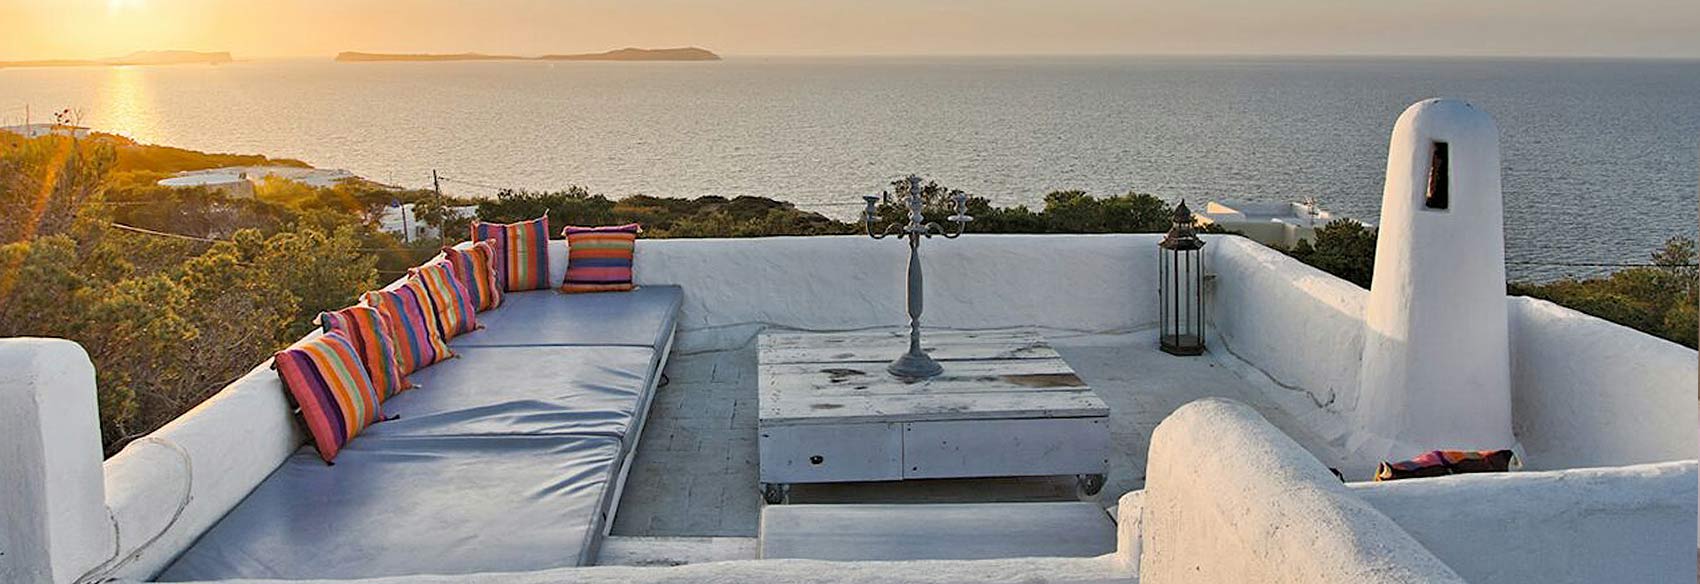 Alquiler de villas privadas de lujo en Ibiza. Servicios VIP en Ibiza. Consulting Services Ibiza